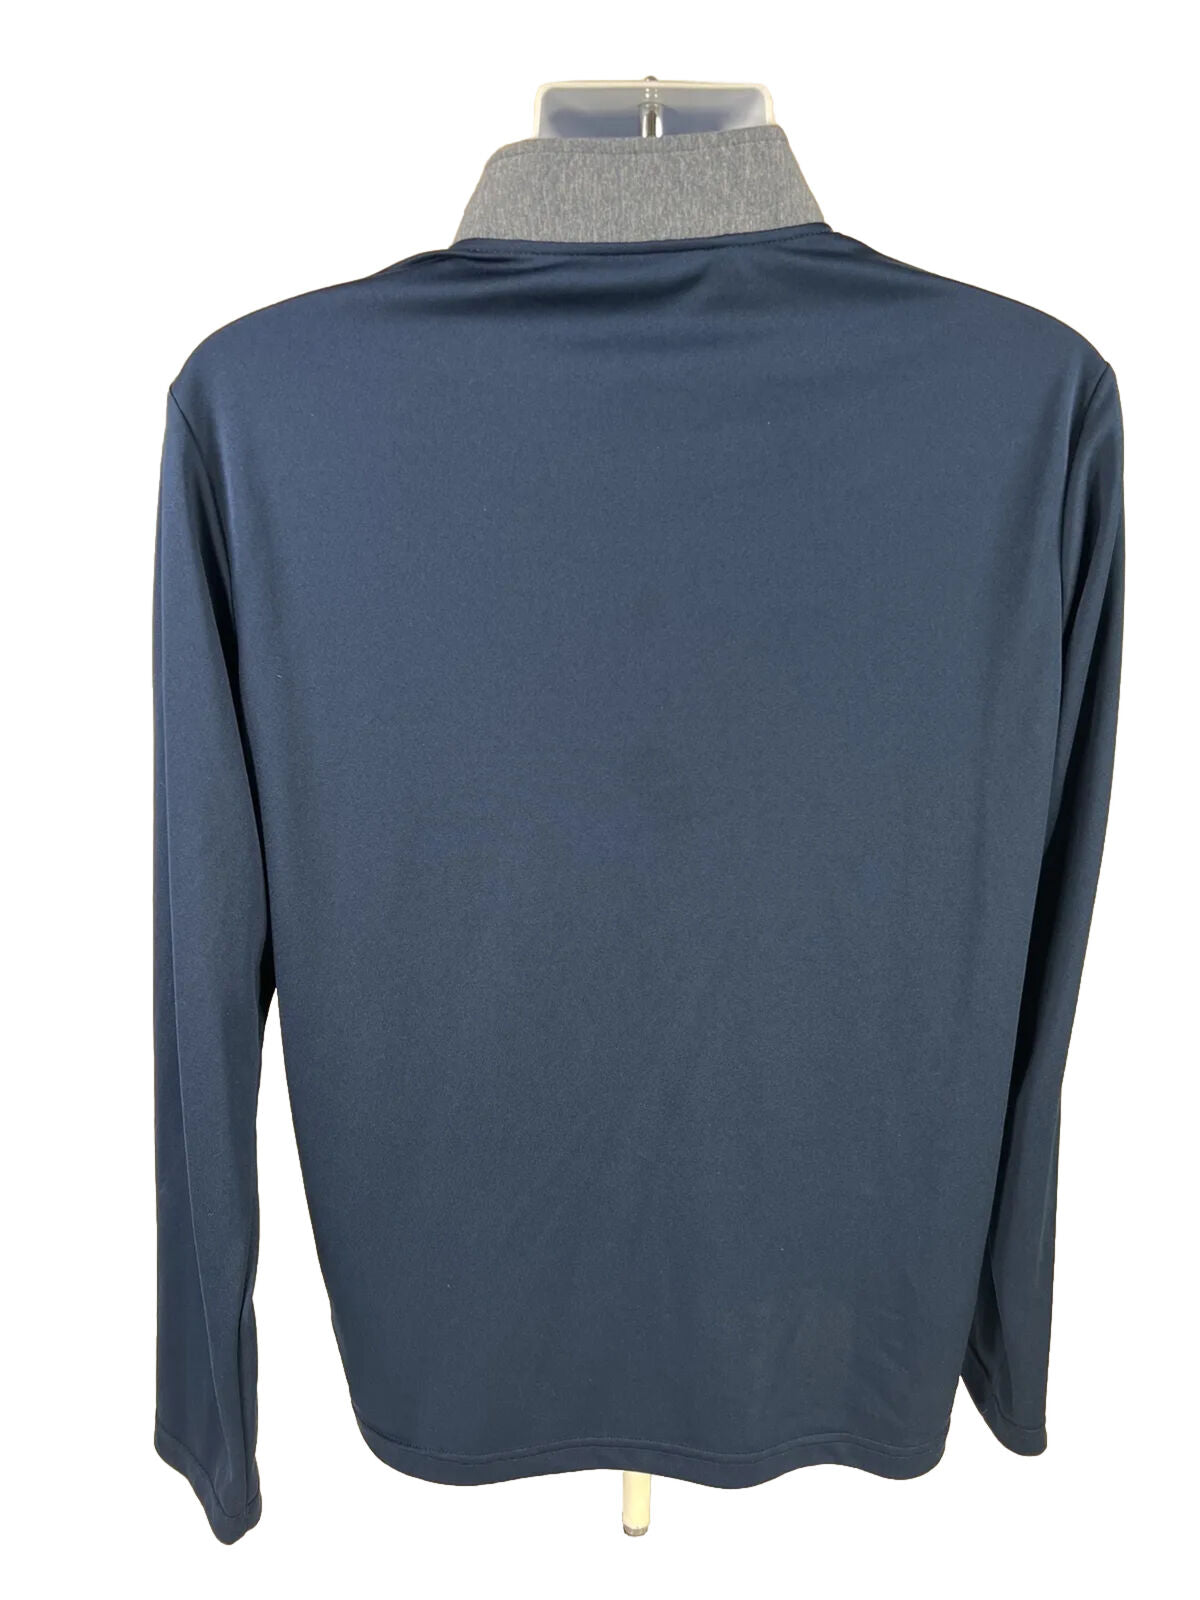 Adidas Men's Blue Long Sleeve 1/4 Zip Athletic Shirt - M